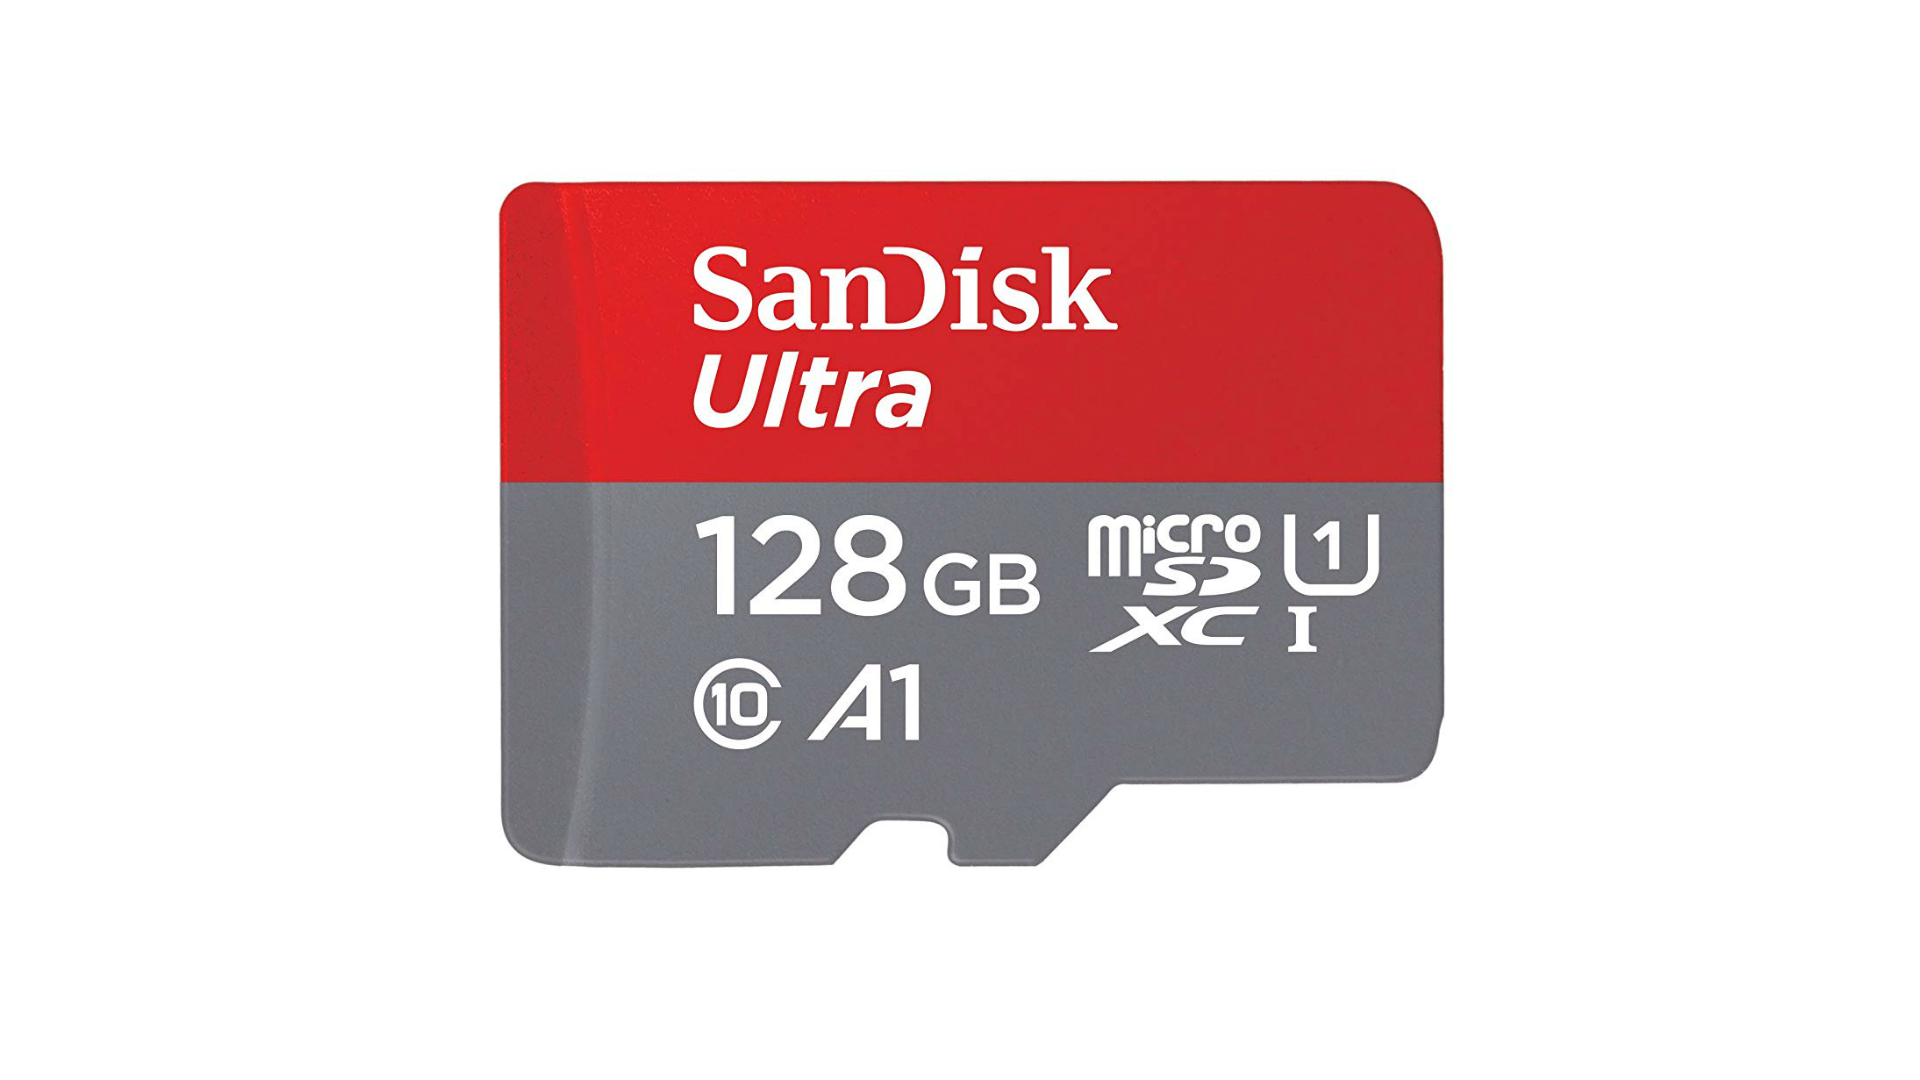 SanDisk Ultra 128GB microSD card press render